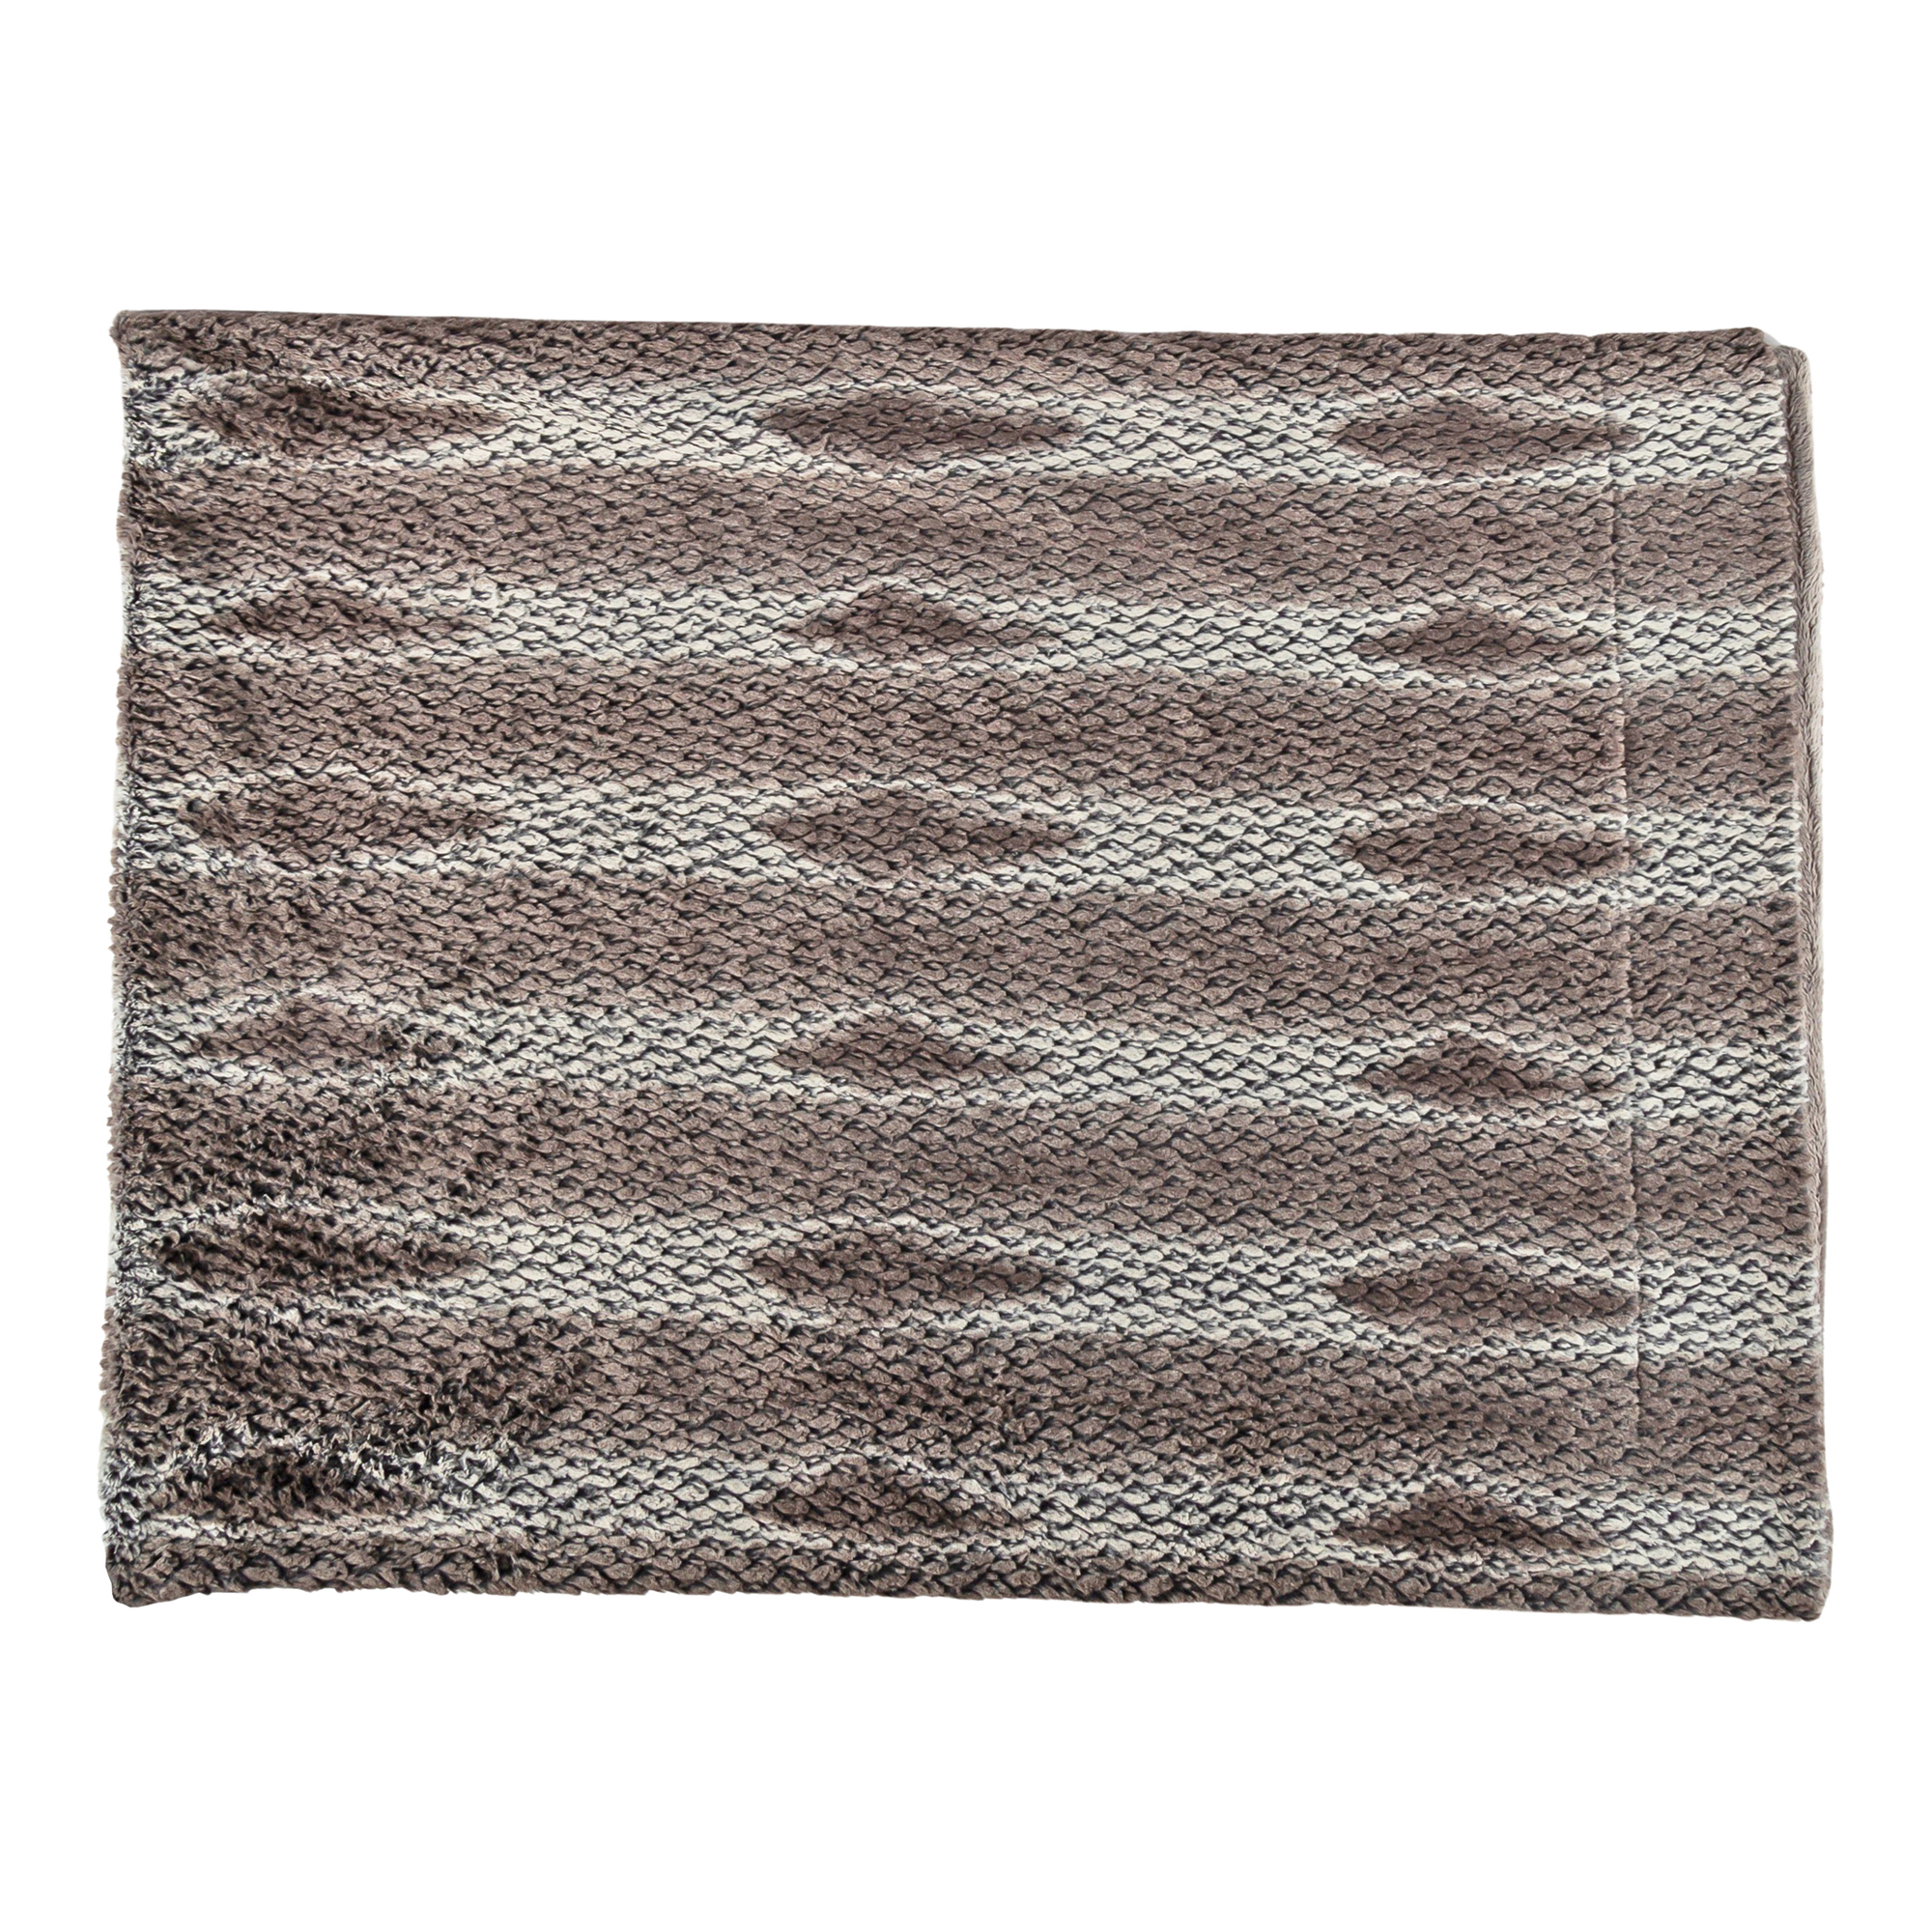 Design plush throw blanket grey/beige, velour backing